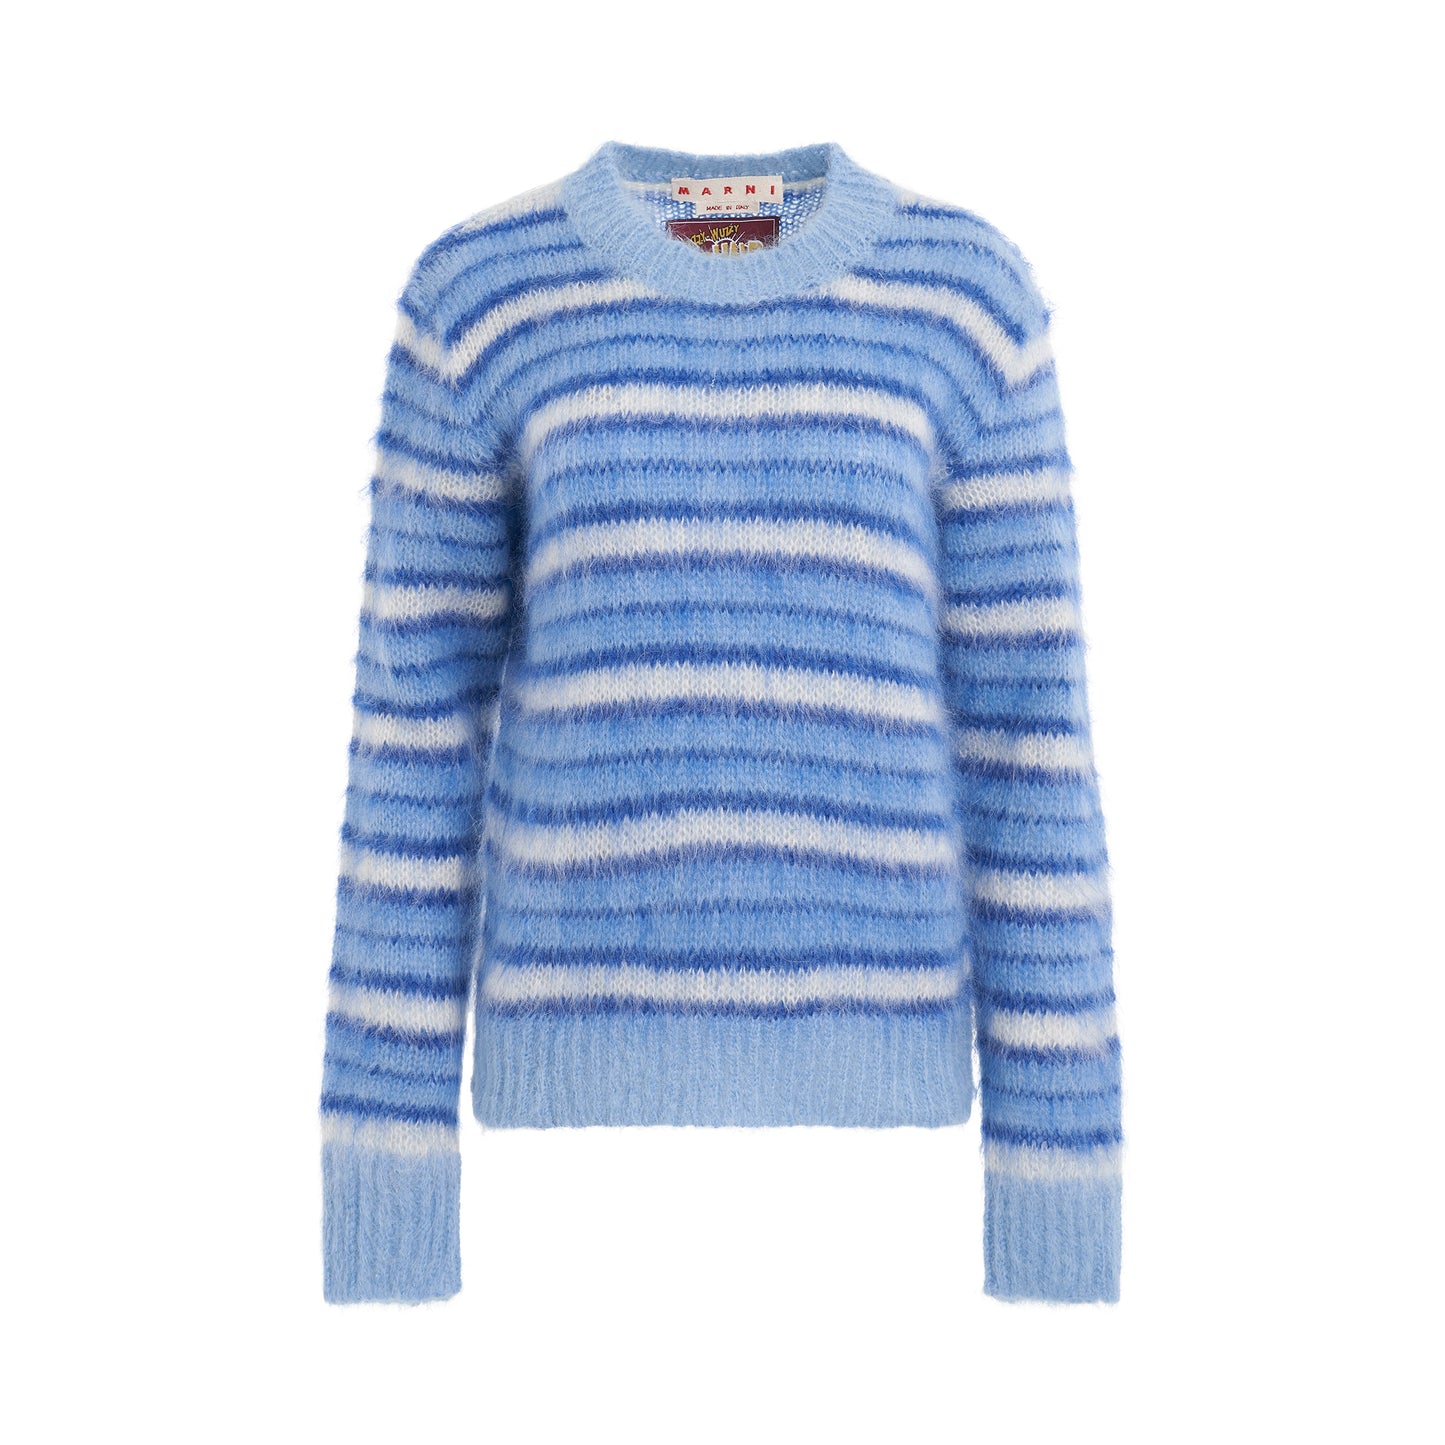 Striped Roundneck Sweater in Iris Blue